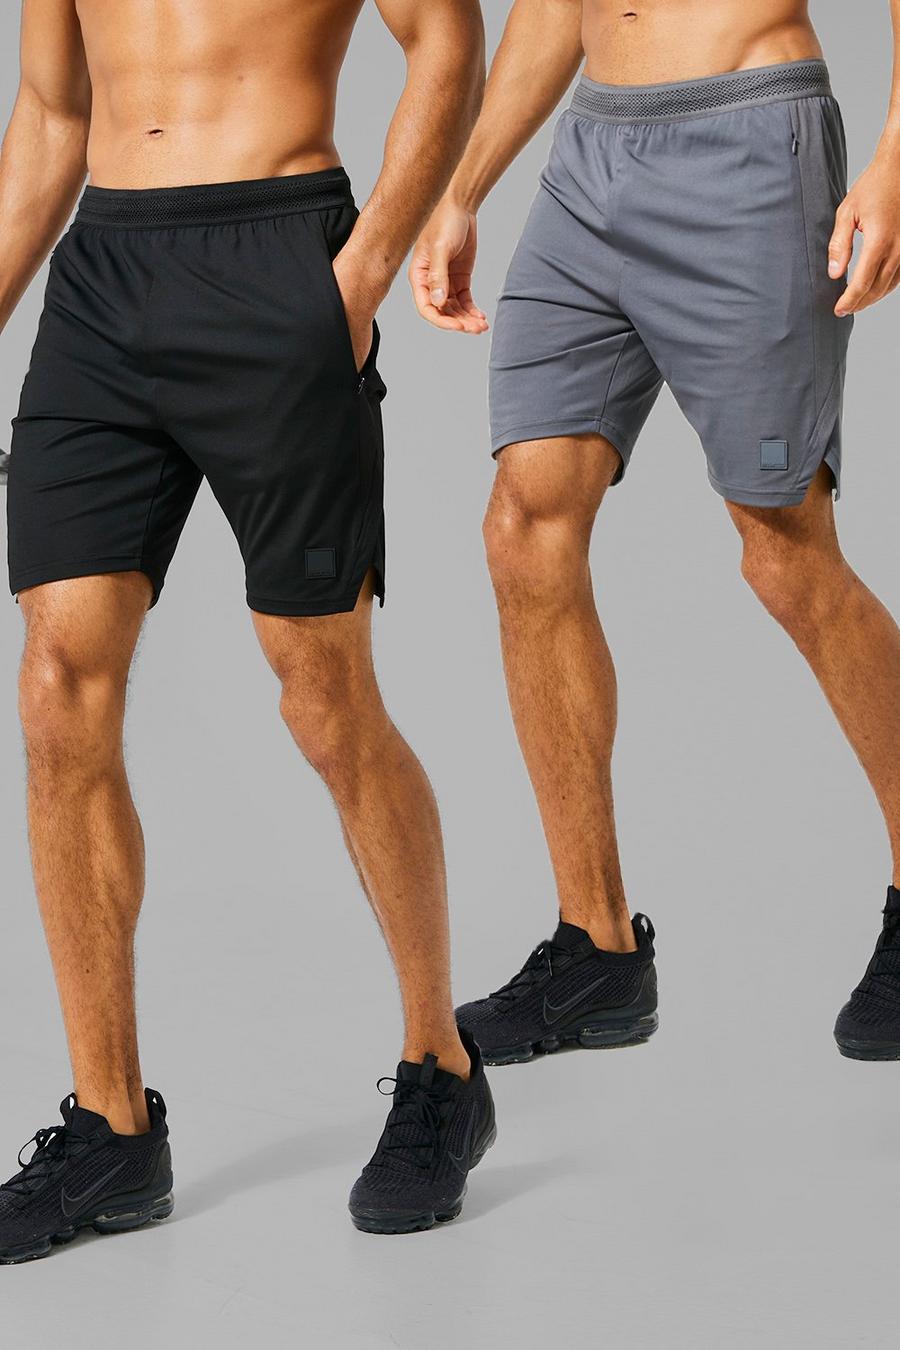 Pantaloncini per alta performance Man Active - set di 2 paia, Multi